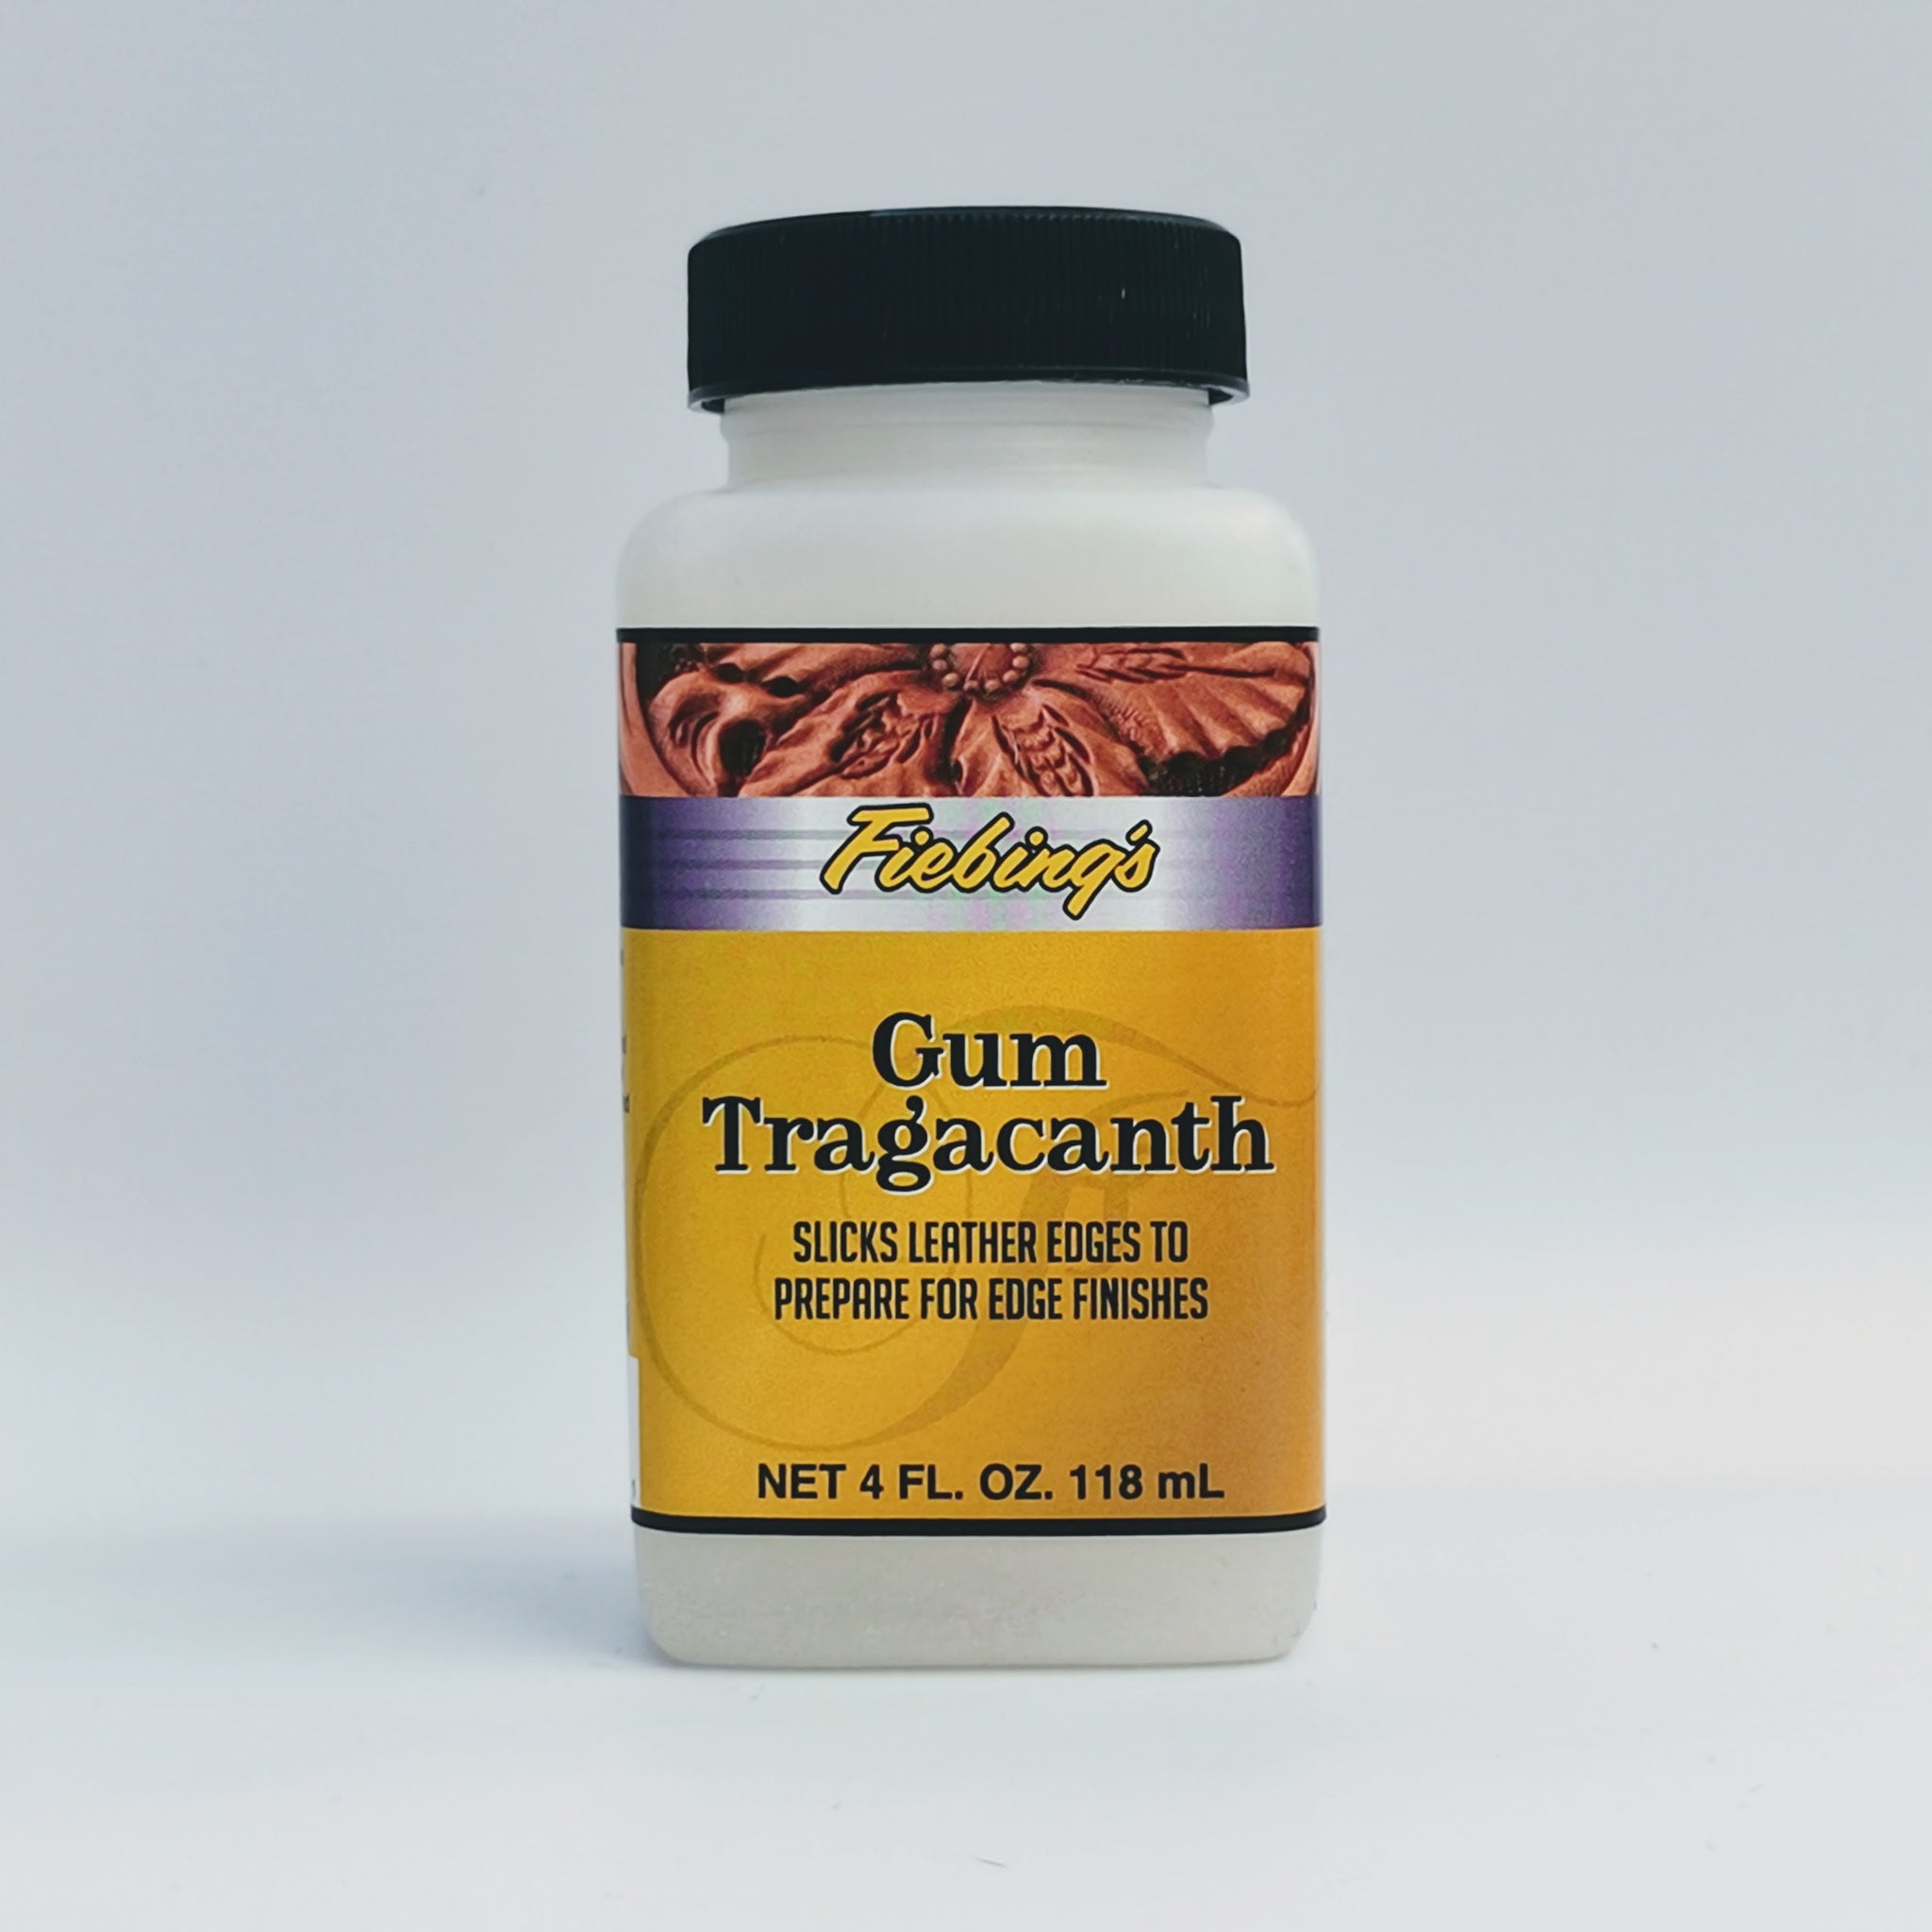 Fiebing's Gum Tragacanth